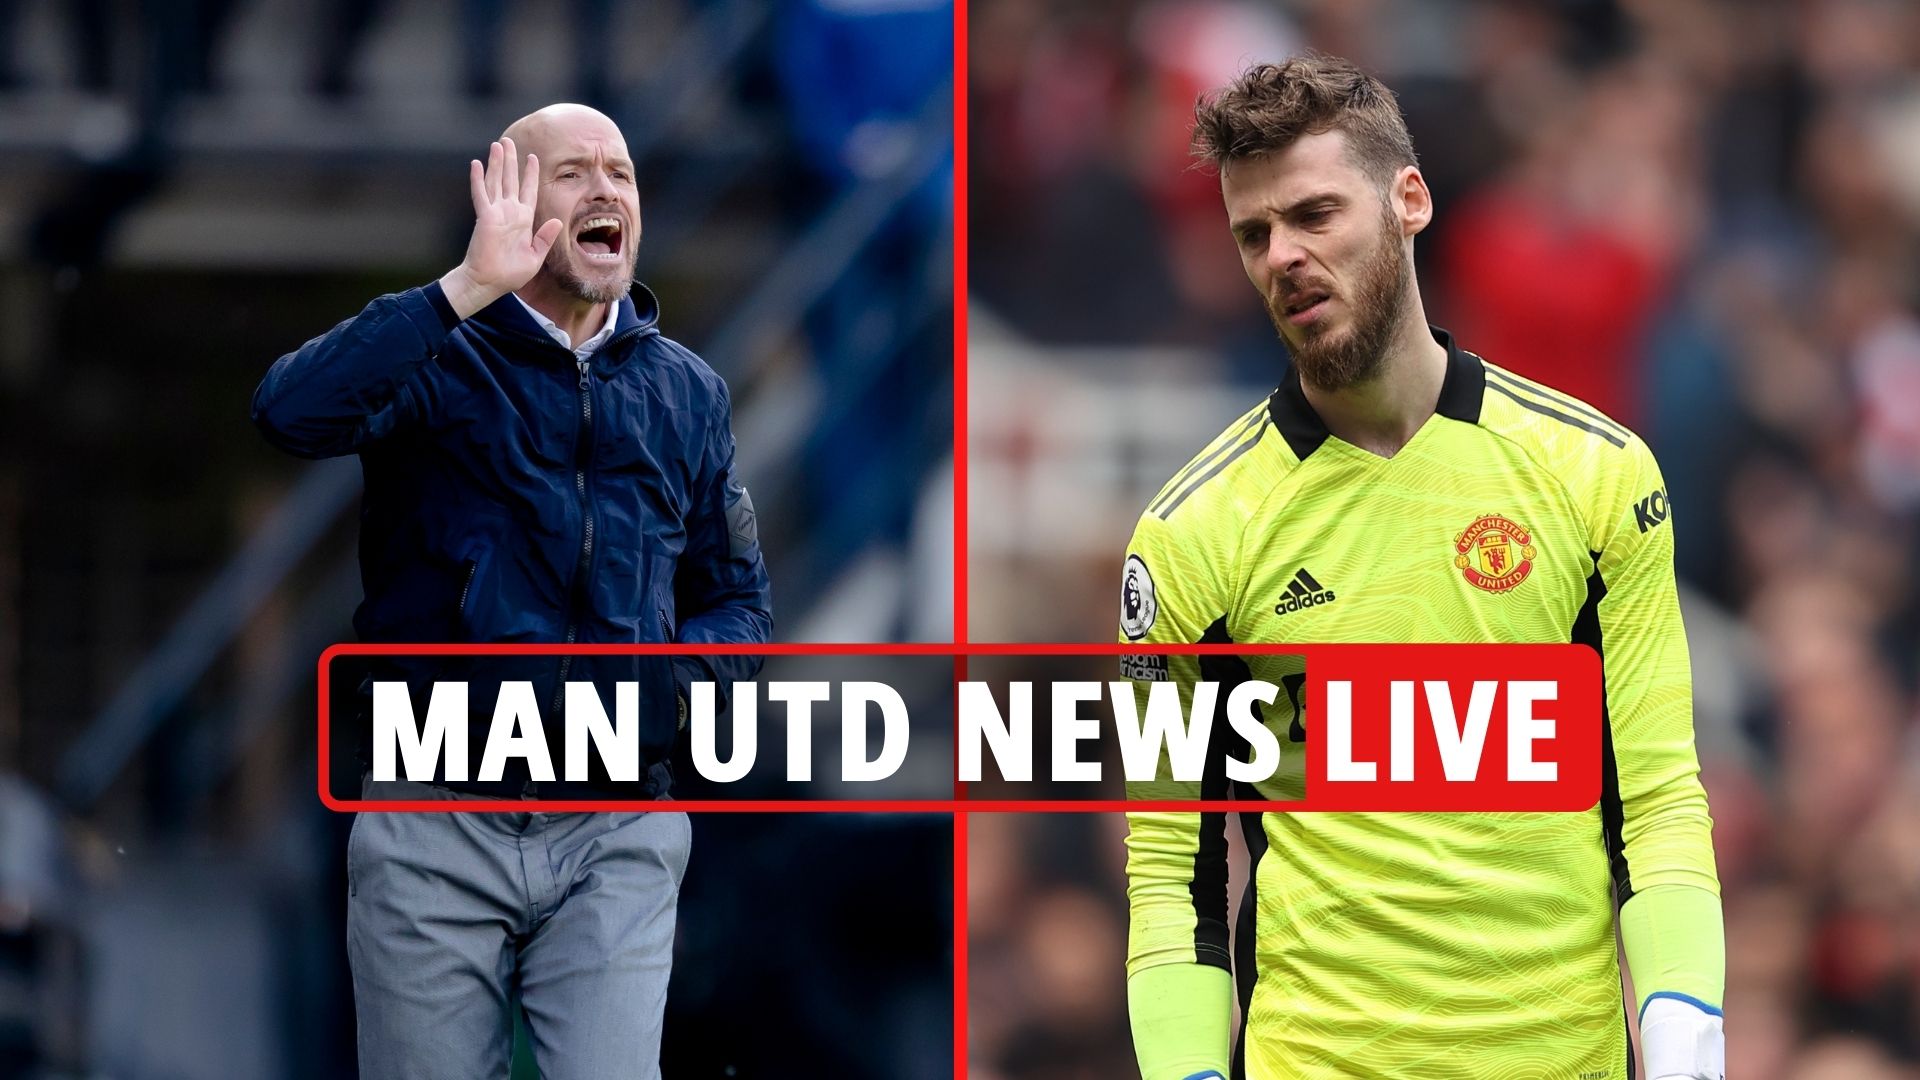 Man Utd news LIVE: Latest updates from Old Trafford